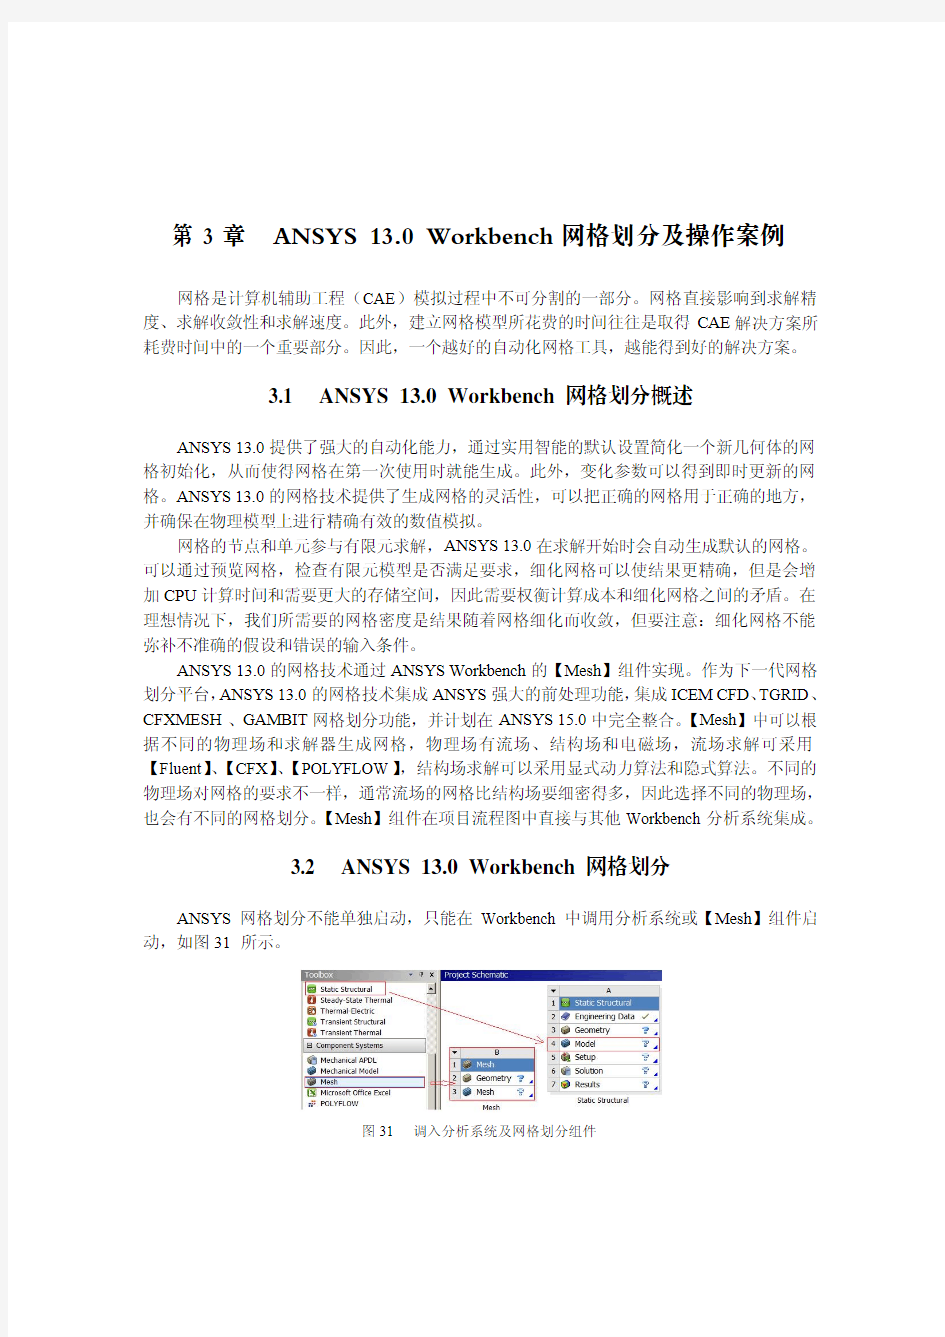 ANSYS 13.0 Workbench 网格划分及操作案例